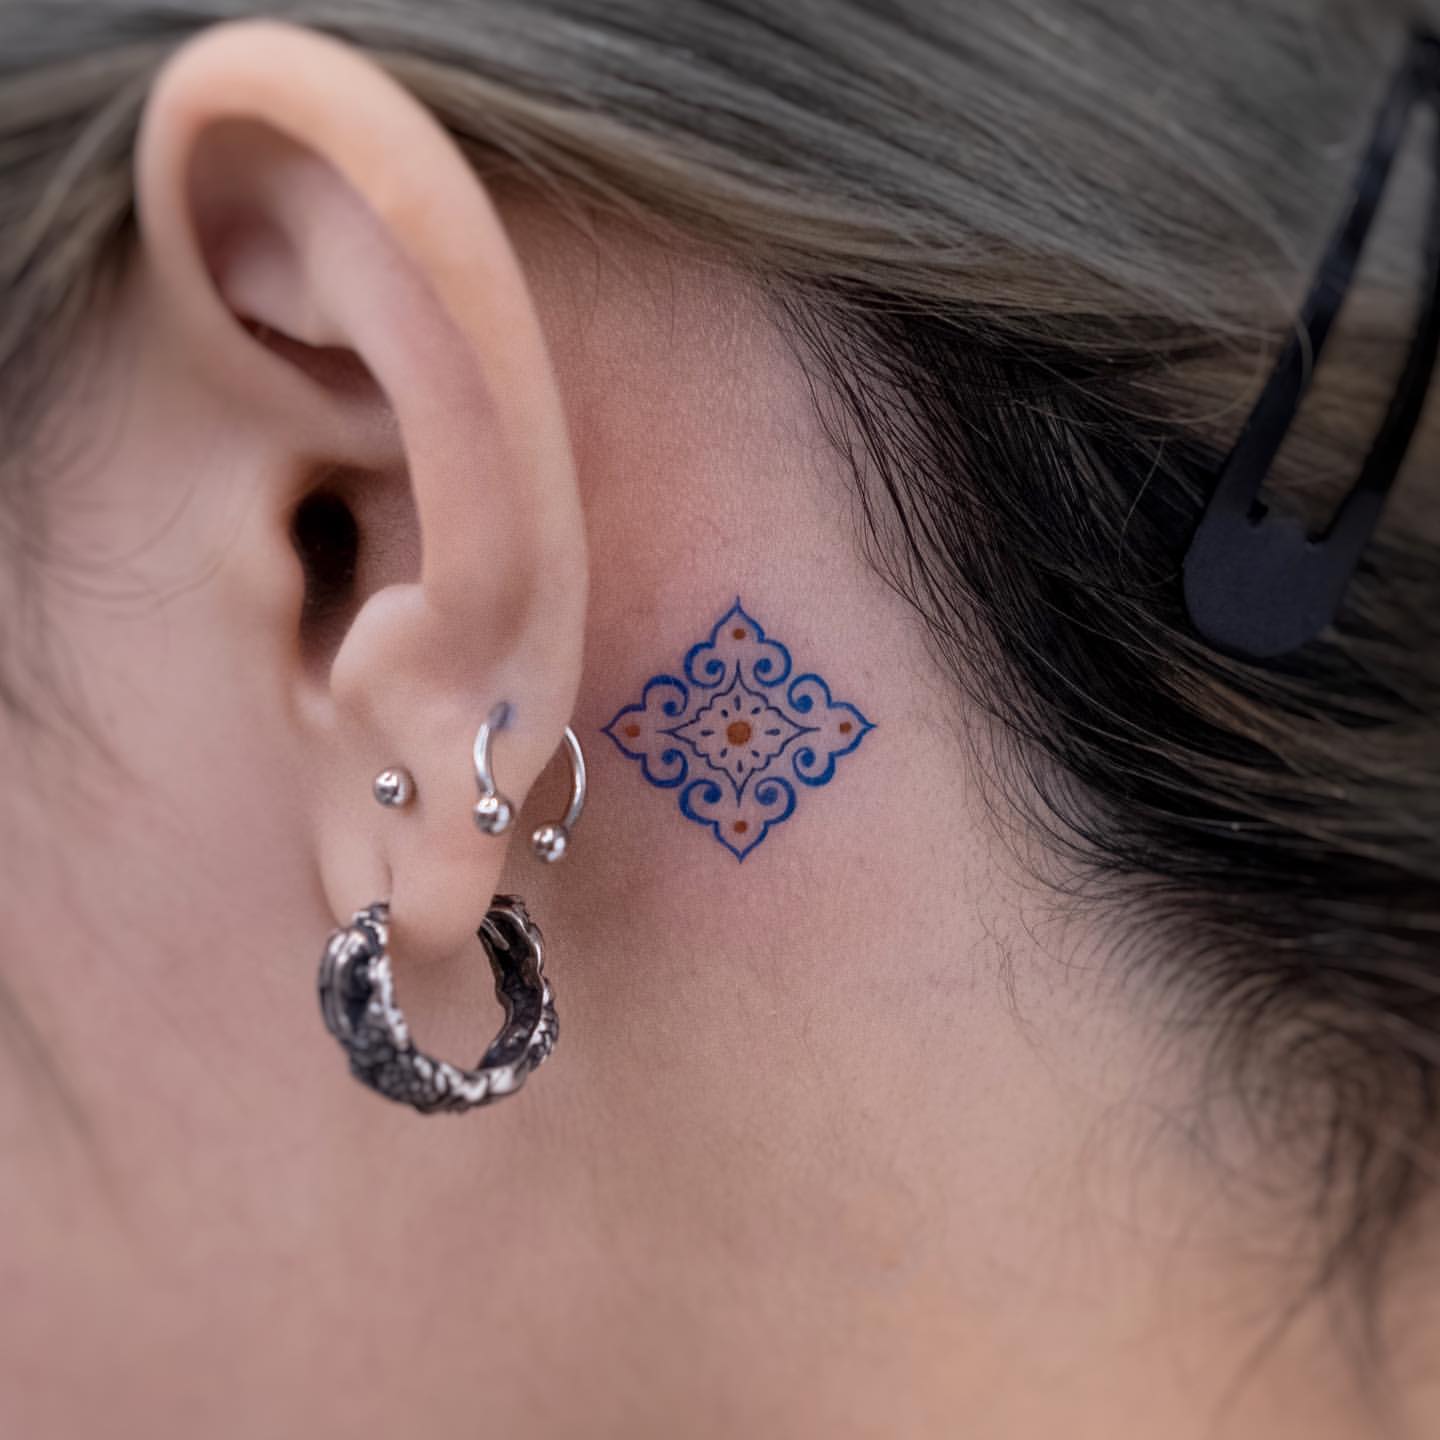 Behind the Ear Tattoos 1